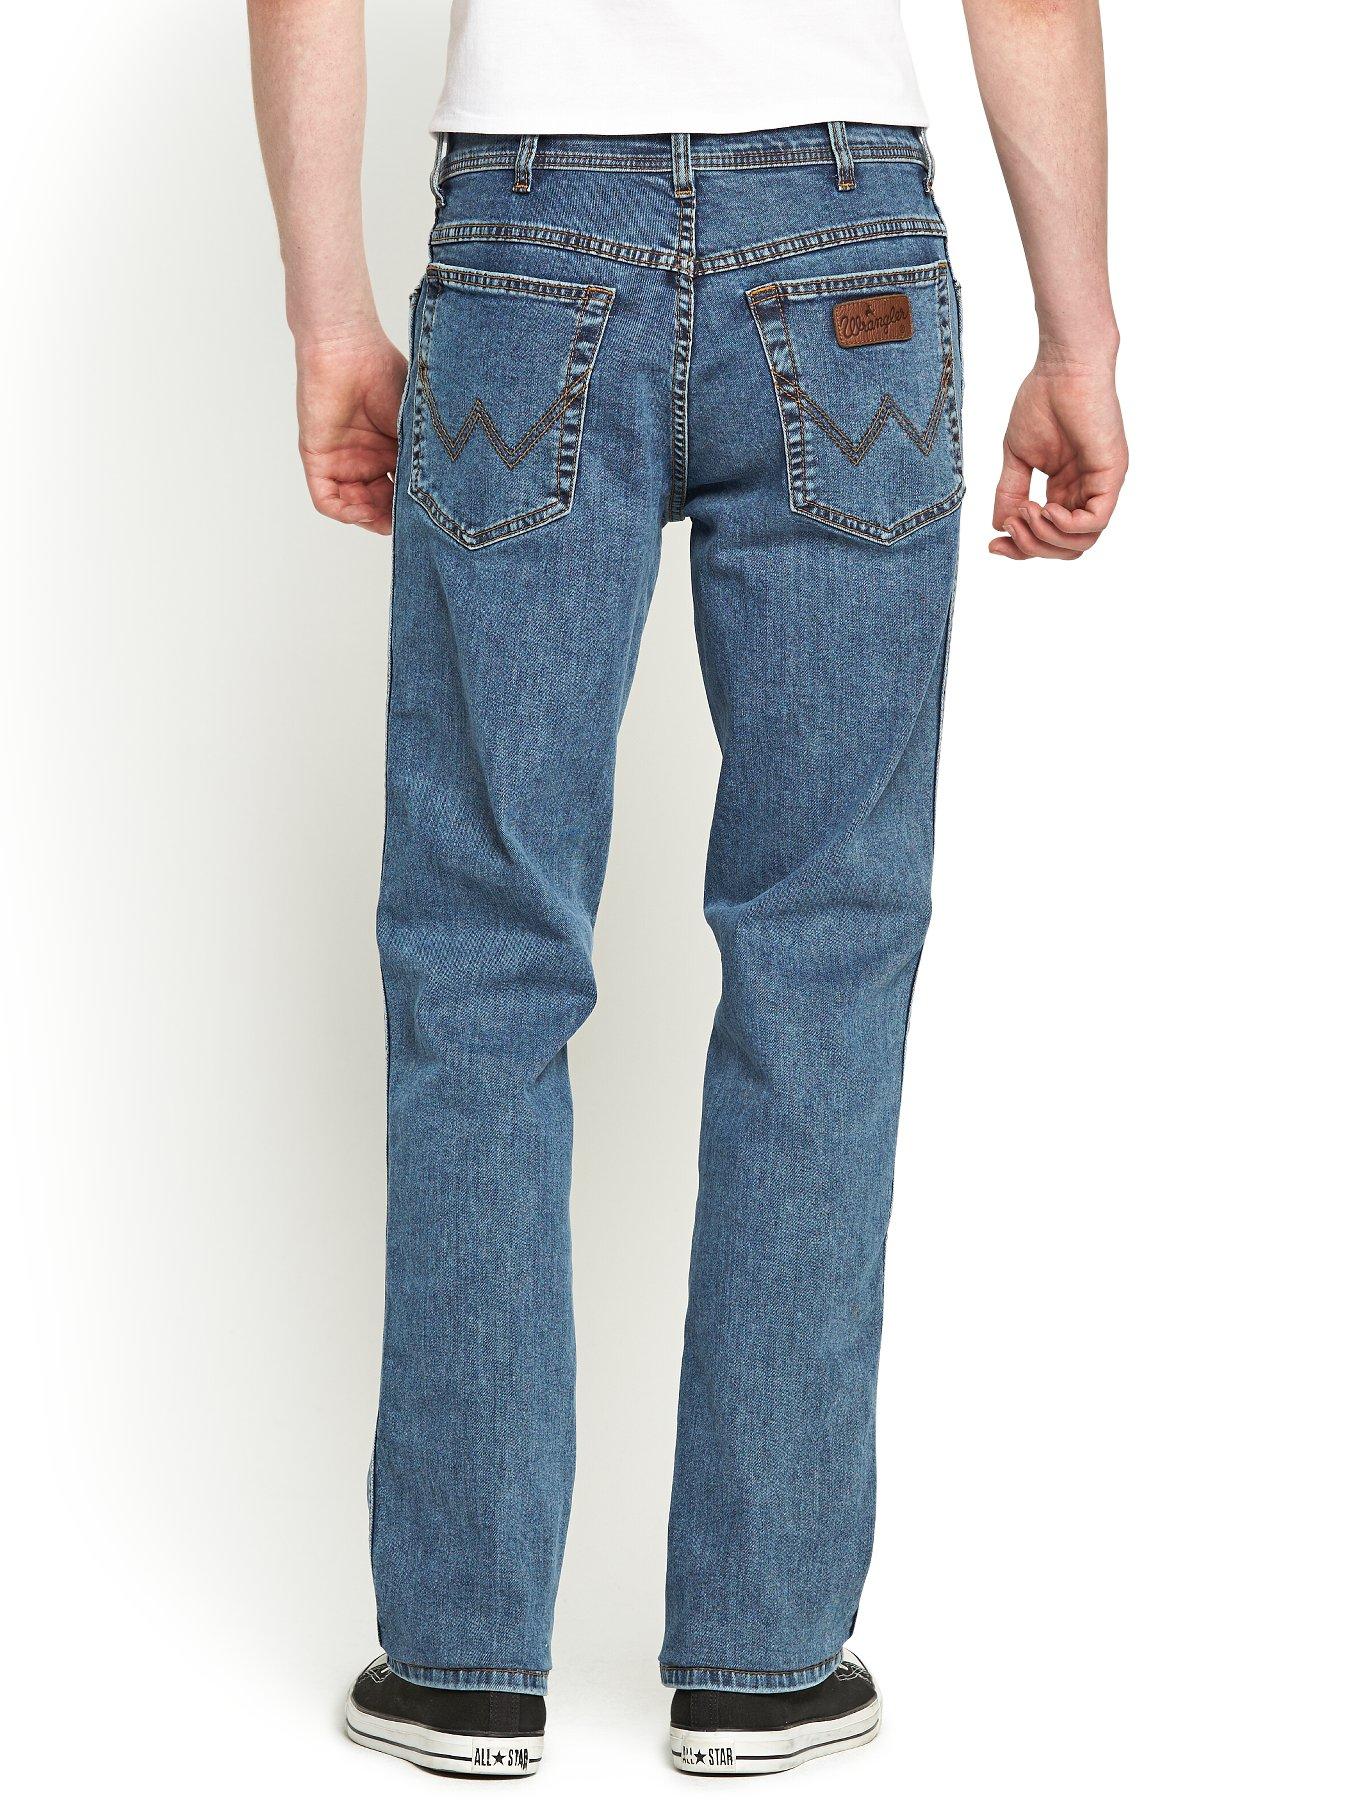 littlewoods mens jeans